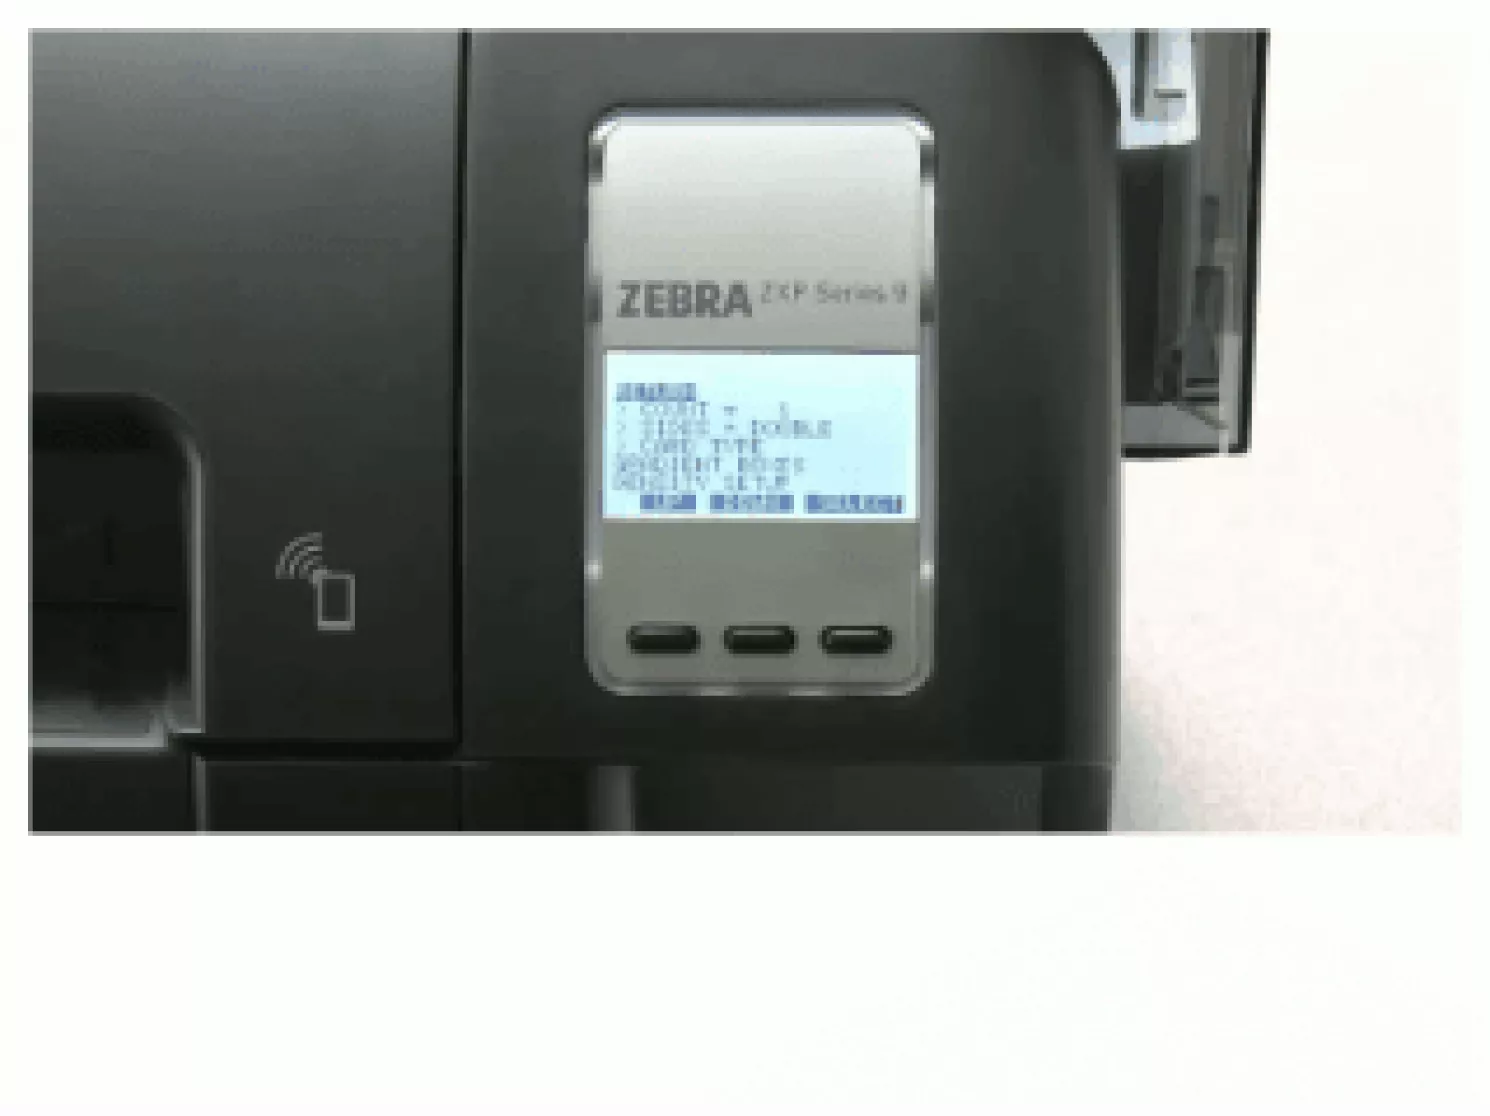 Zebra ZXP Series 9 display